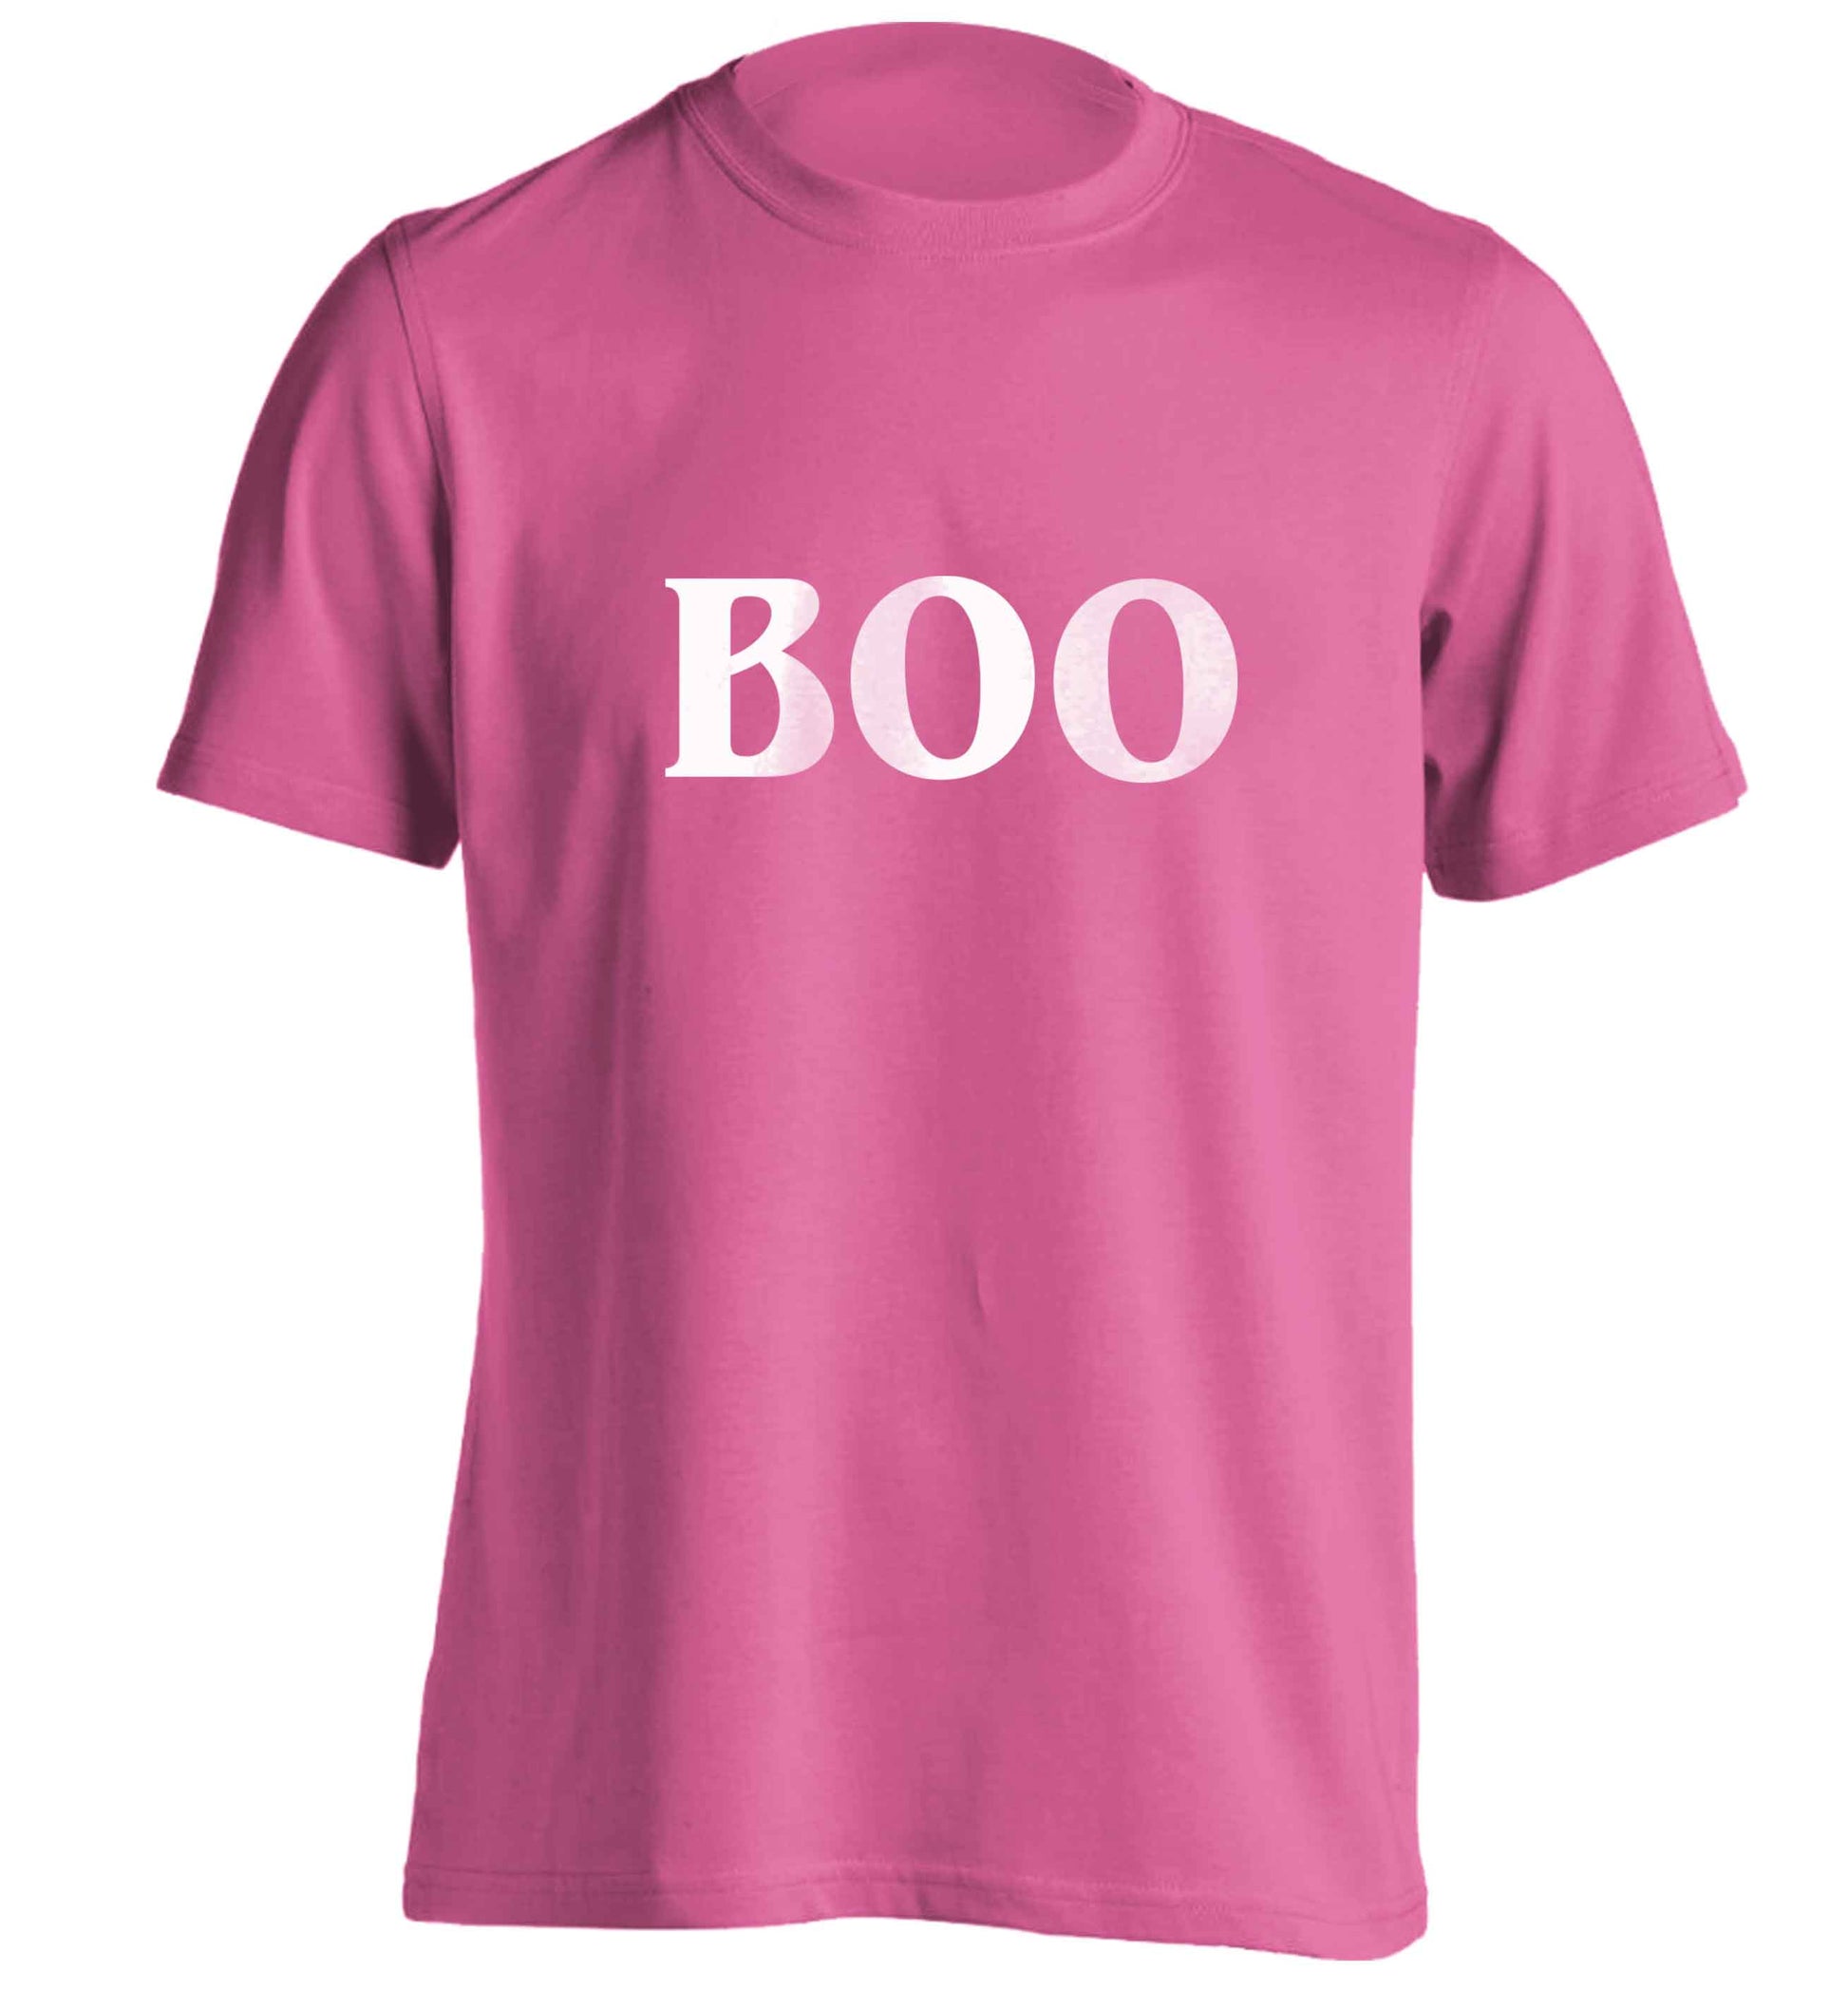 Boo adults unisex pink Tshirt 2XL